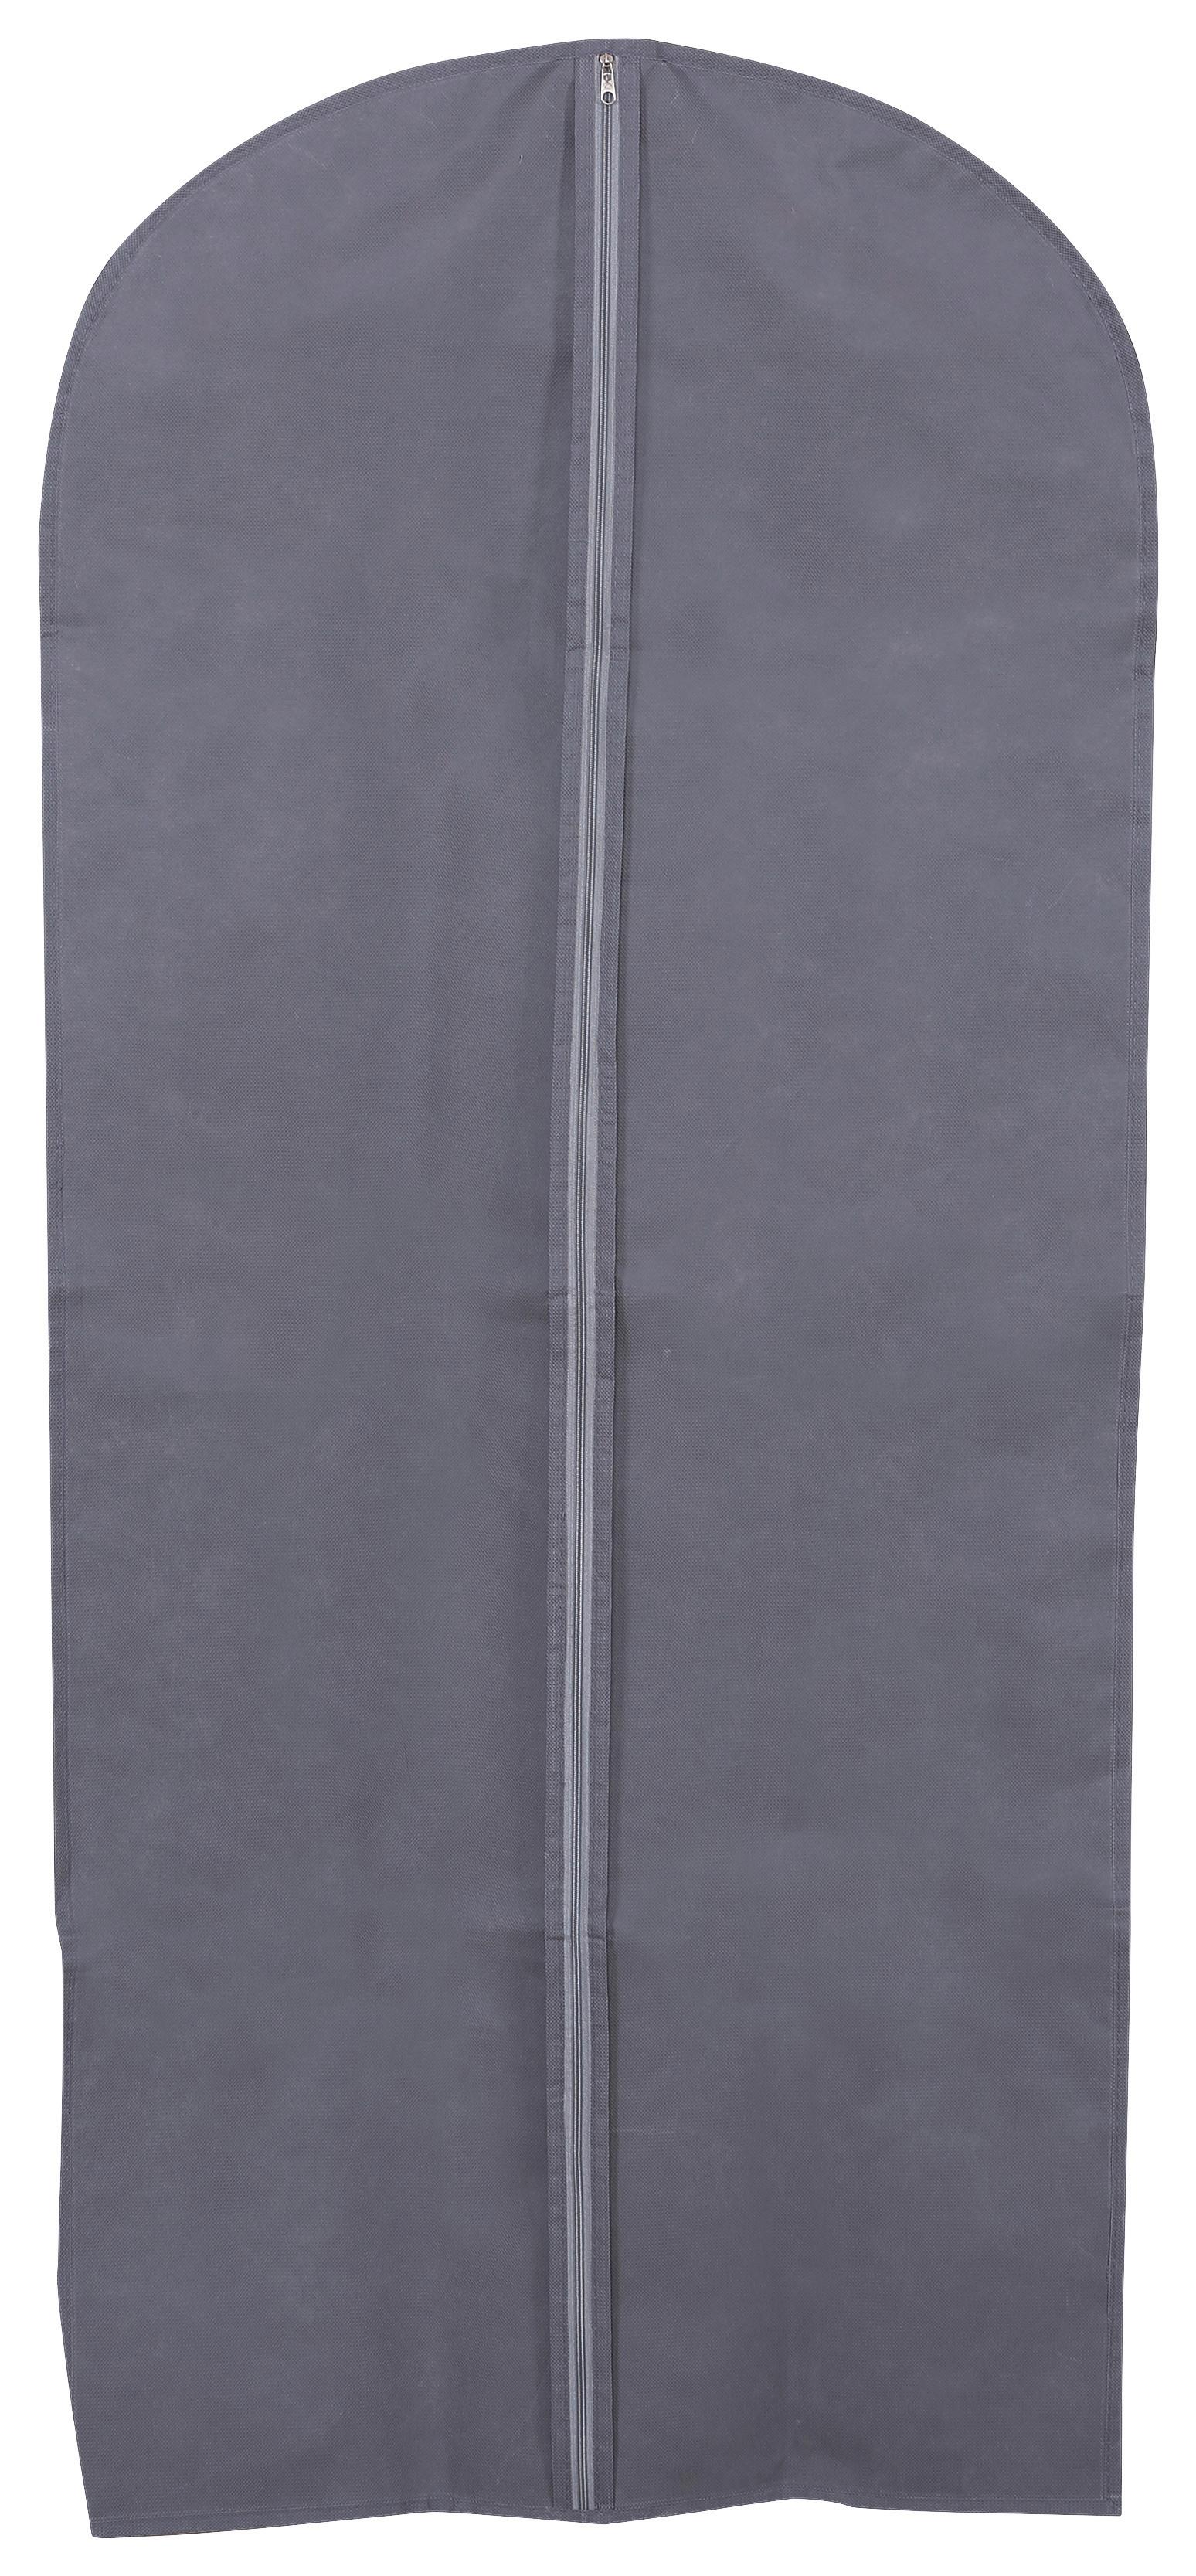 Kleidersack Kläck in Grau - Grau, KONVENTIONELL, Textil (60/135cm) - Modern Living